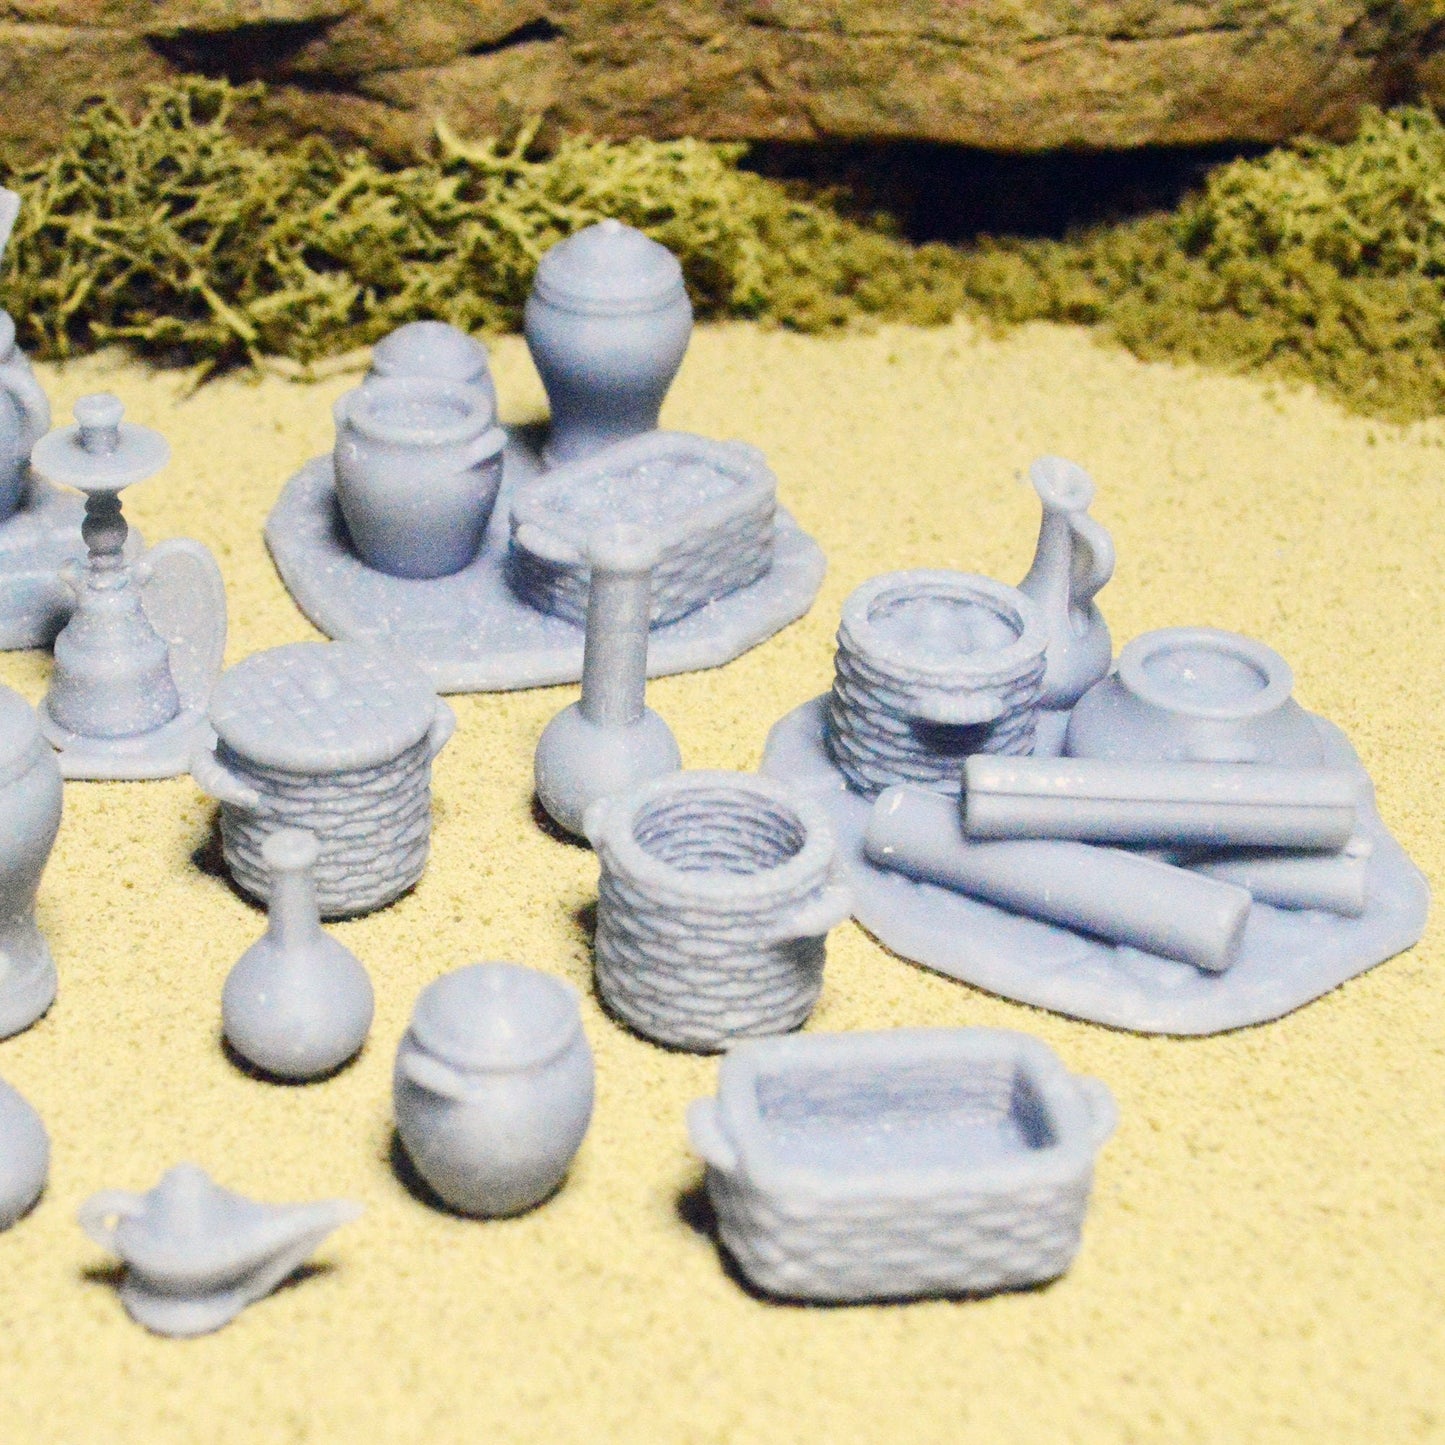 Miniature Market Bazaar Props 28mm for D&D Terrain, DnD Pathfinder Desert, Empire of Scorching Sands, Vases, Lamps, Baskets